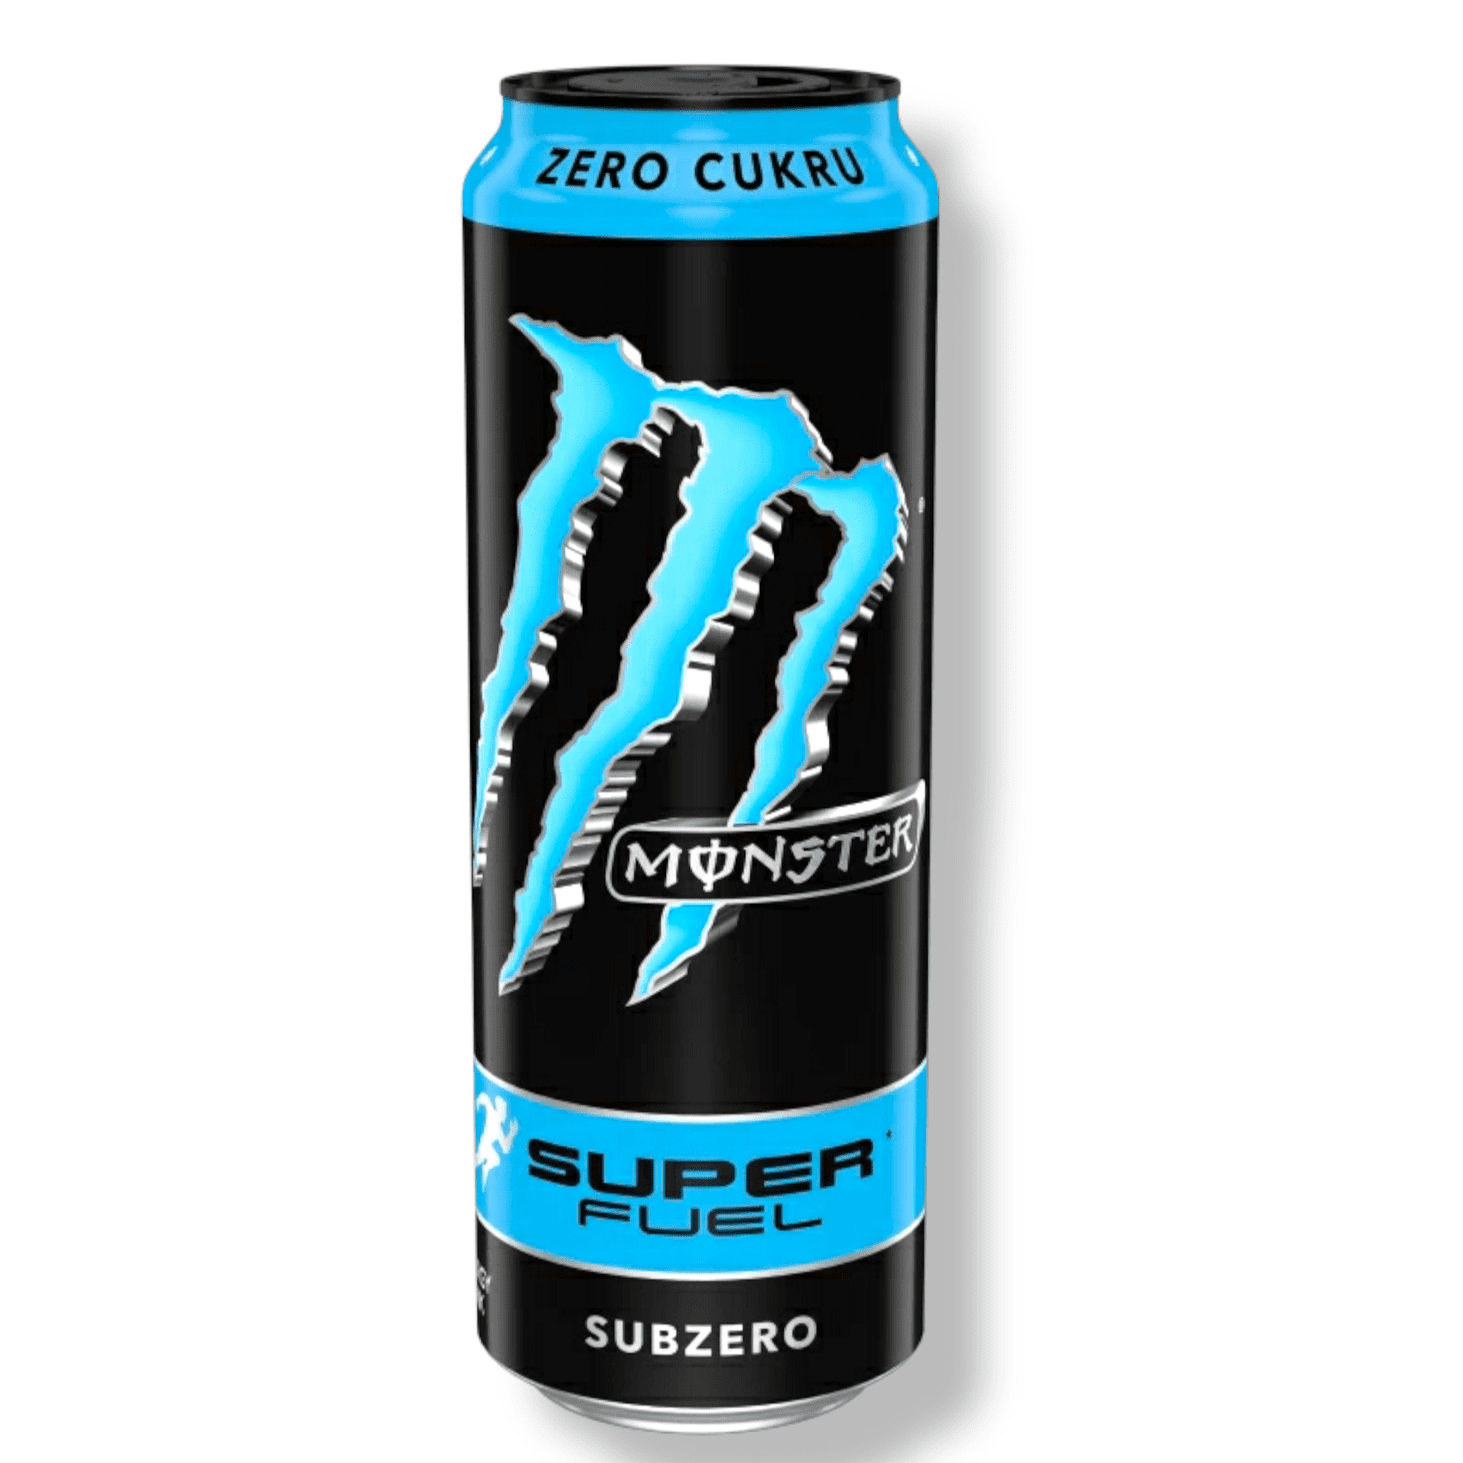 Monster Energy Super Fuel Subzero - Sportgetränk ohne Kohlensäure mit Koffein